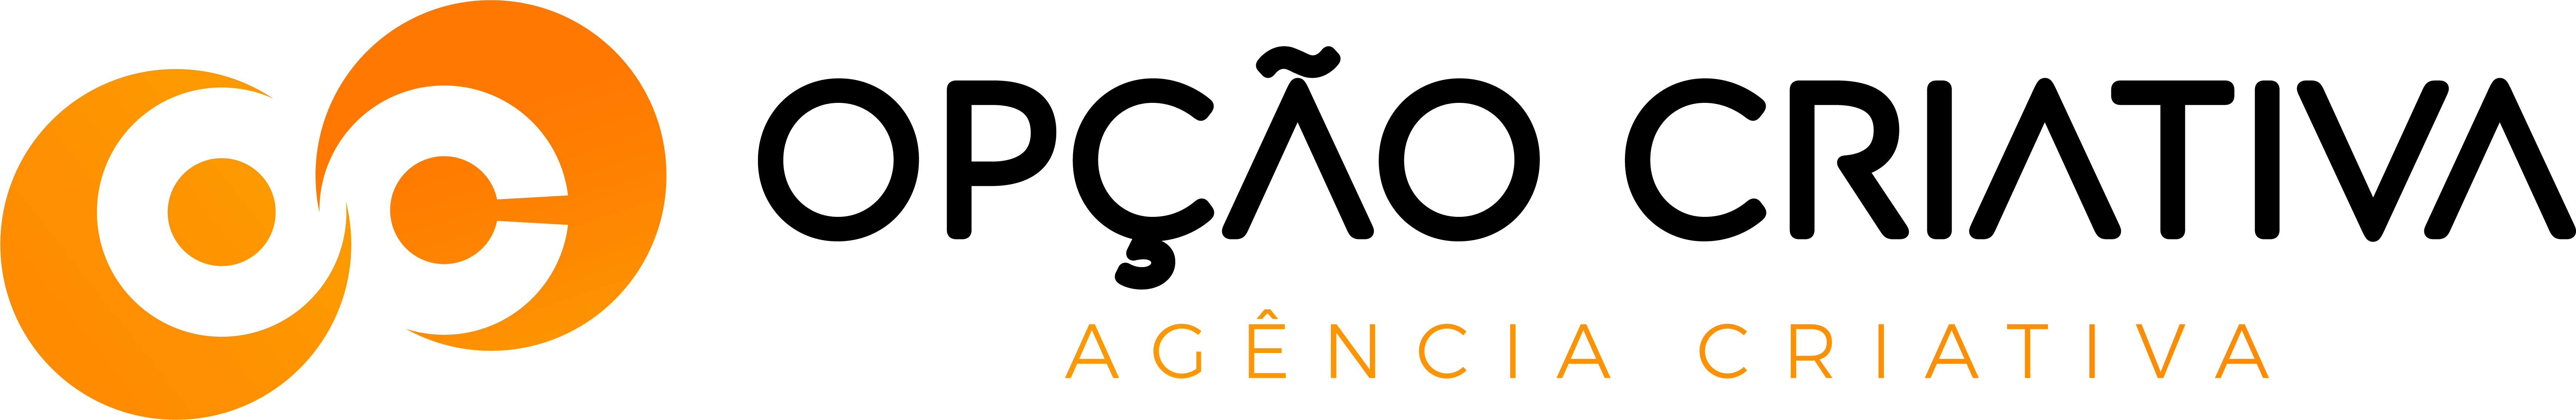 logo-agencia-opcao-criativa